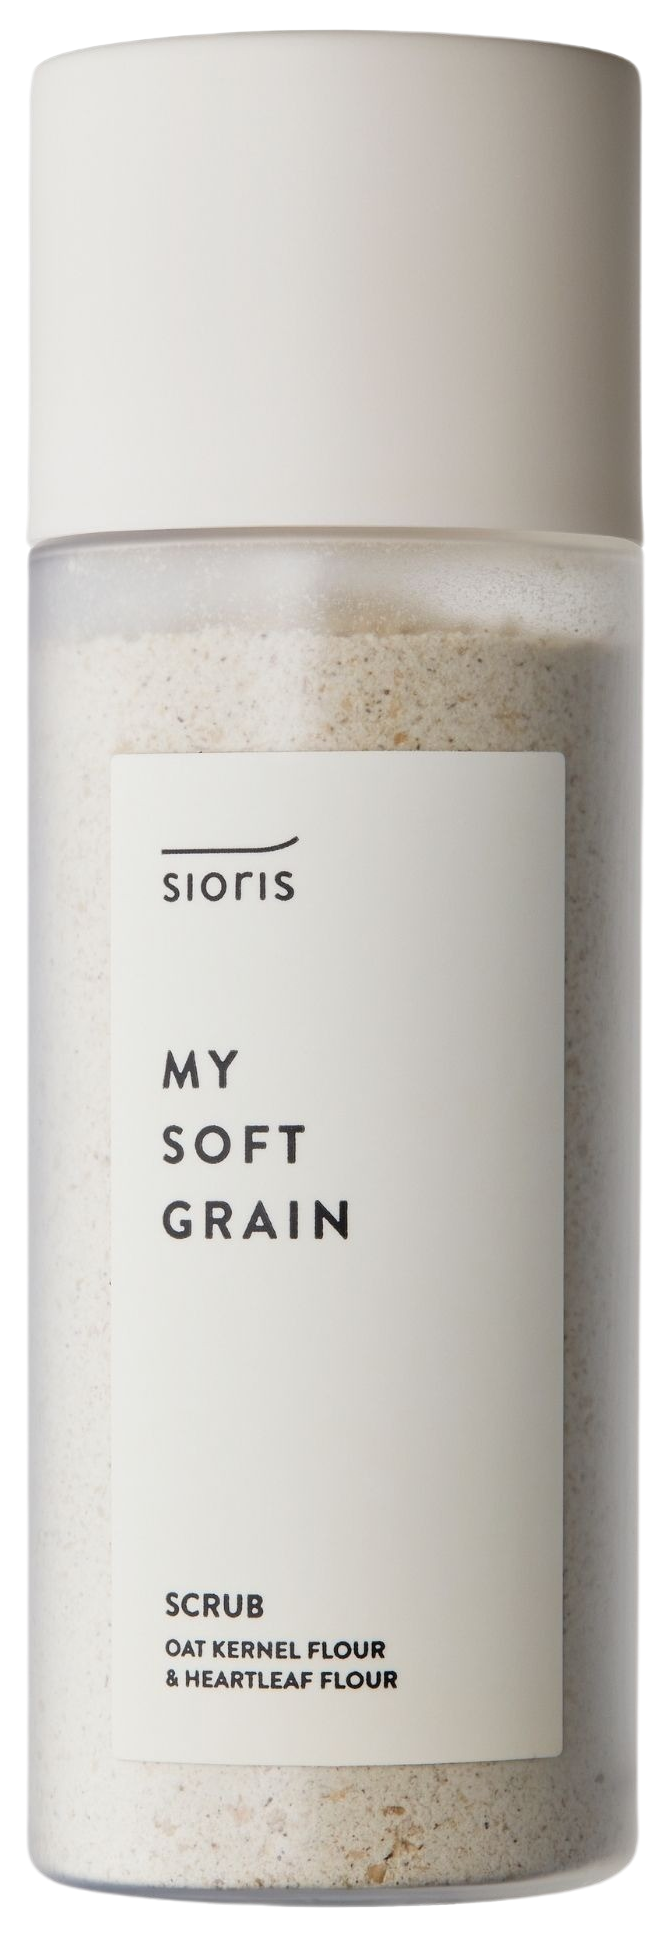 Sioris My Soft Grain Scrub, 45 gram